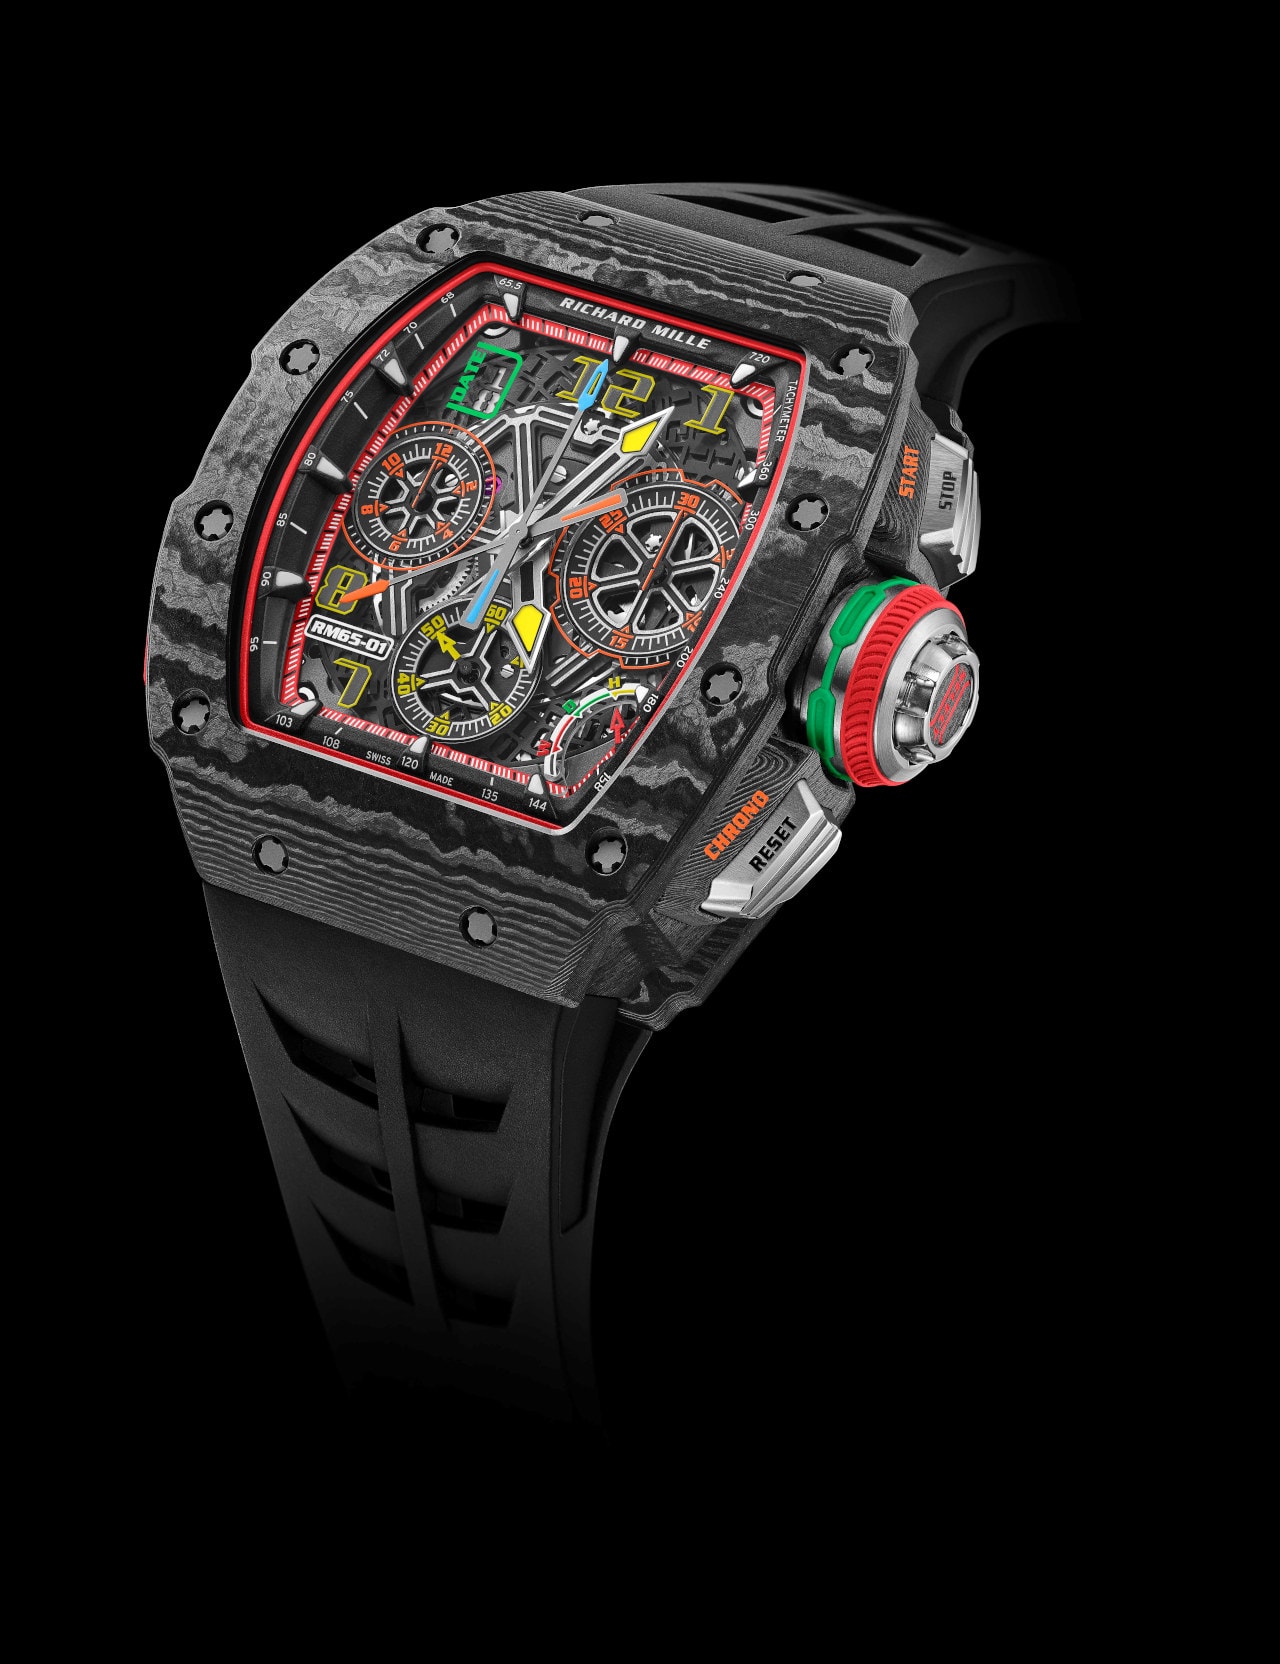 Richard Mille Rm65 01 Luxury Watch